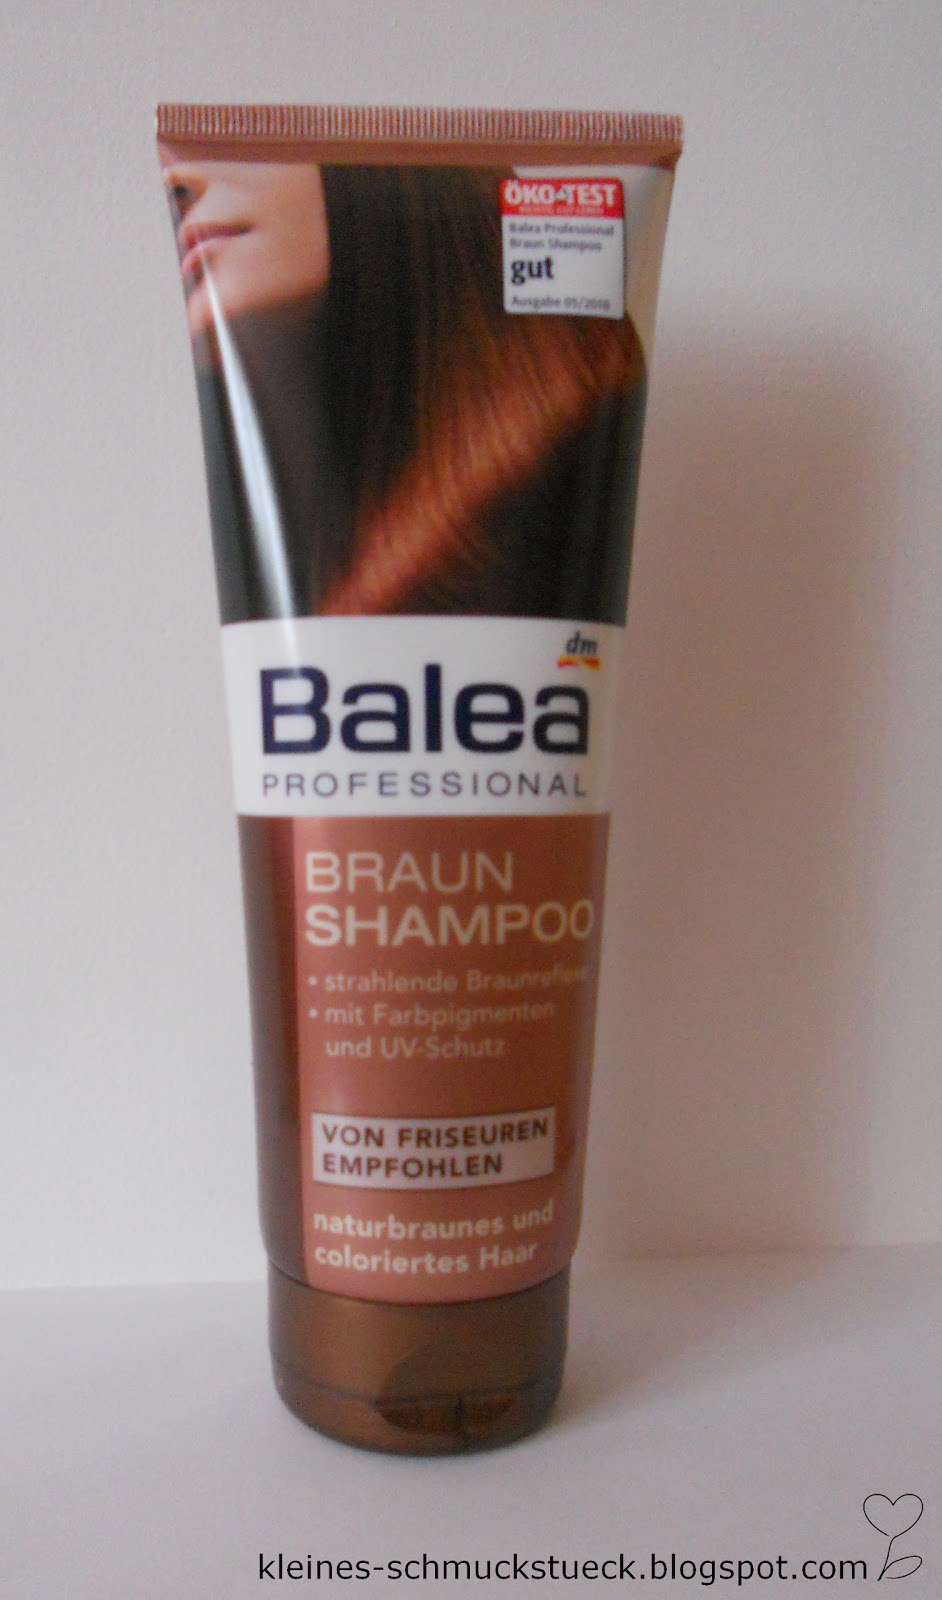 Balea braun shampoo haare dunkler